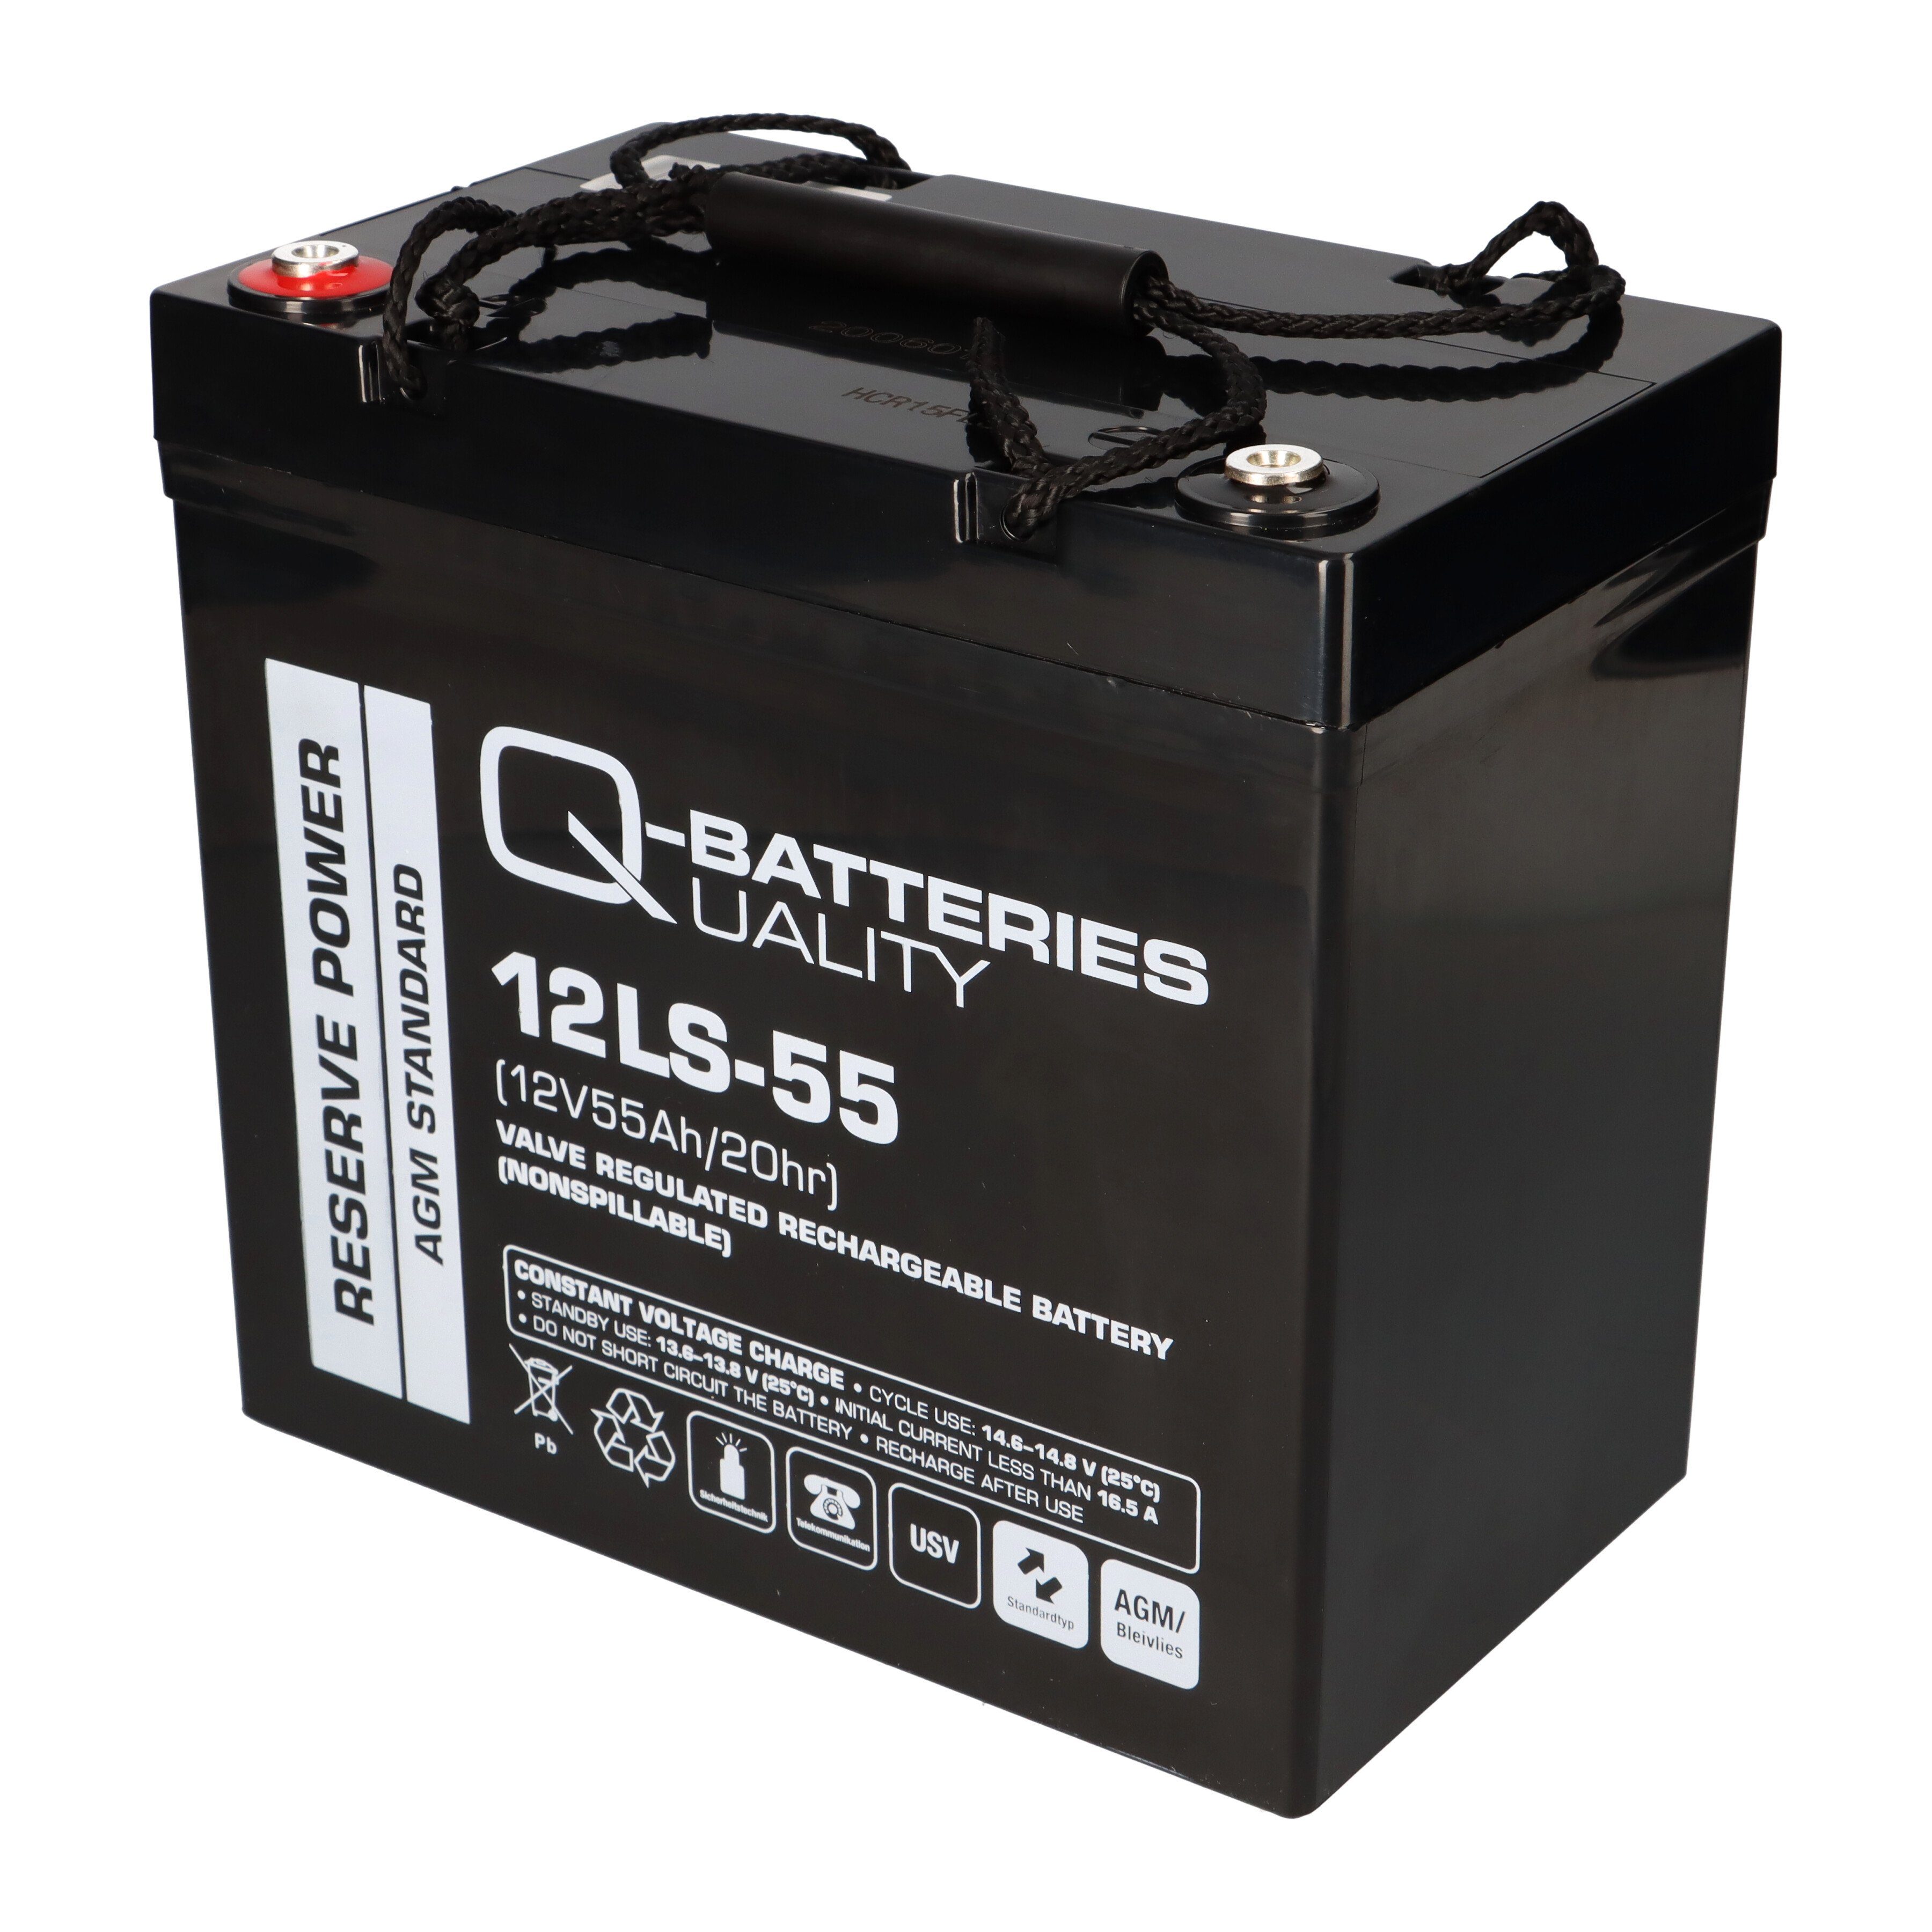 Q-Batteries Akku Blei / 10 55Ah Standard-Typ VRLA Q-Batteries - Bleiakkus 12V 12LS-55 AGM